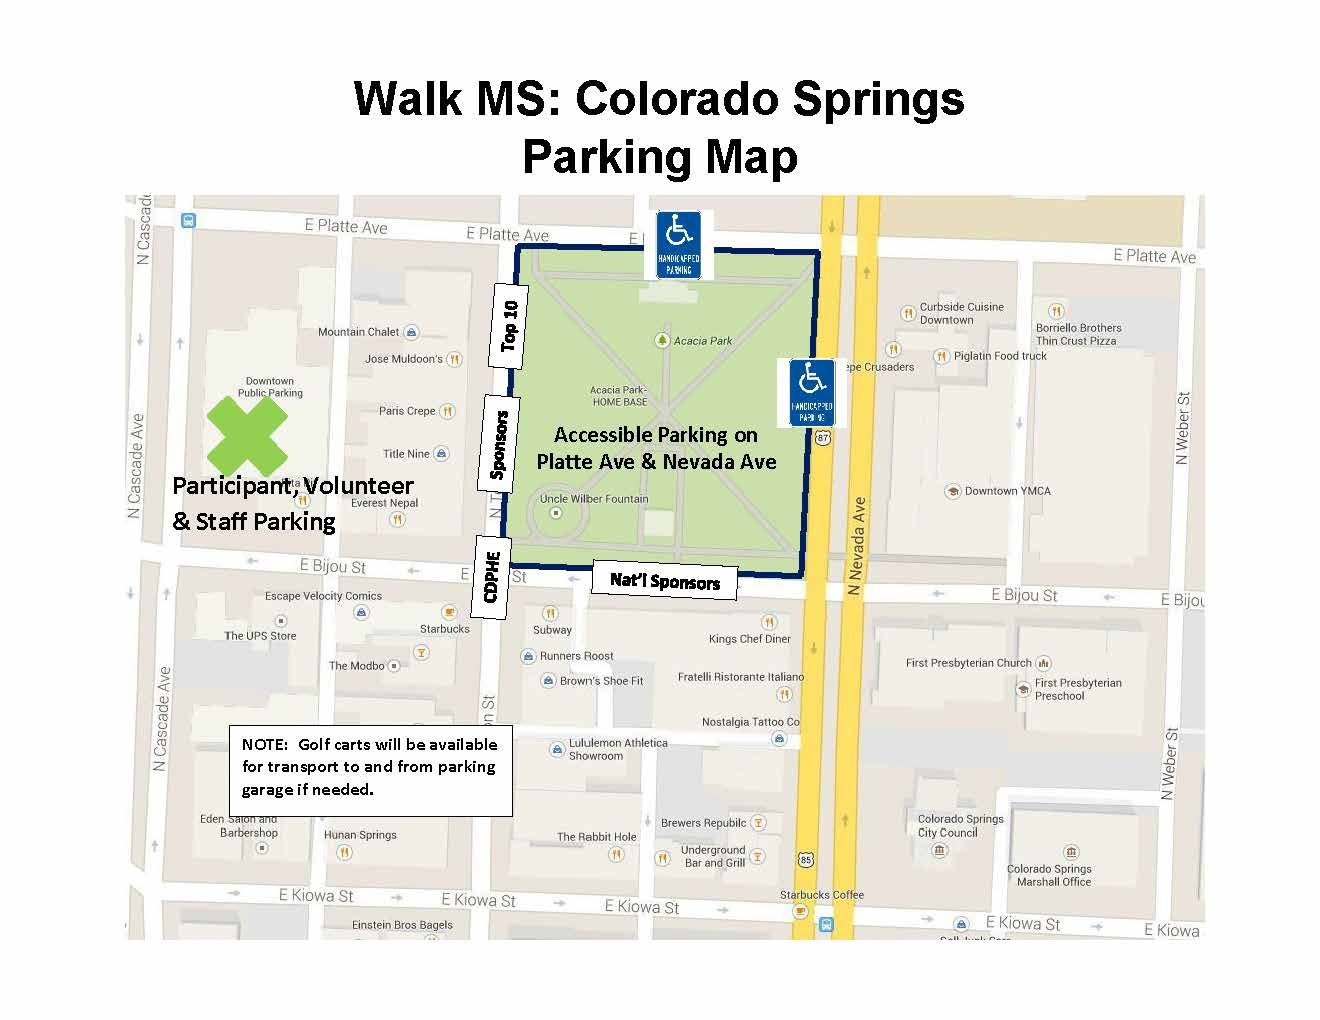 Walk MS: Colorado Springs 2022 parking map